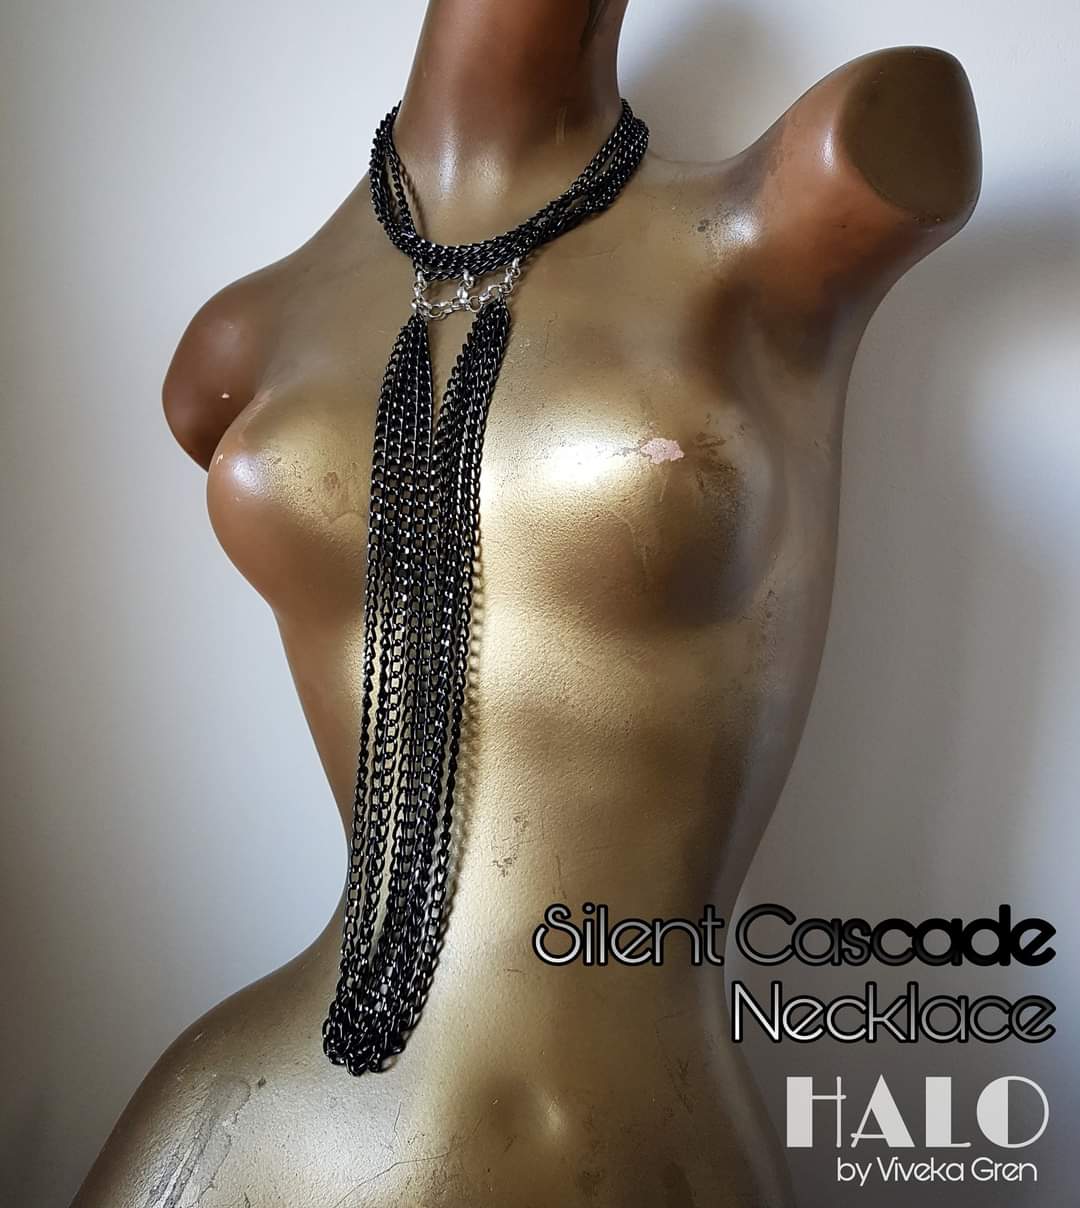 Twilight Cascade mini collection: the Silent Cascade necklace